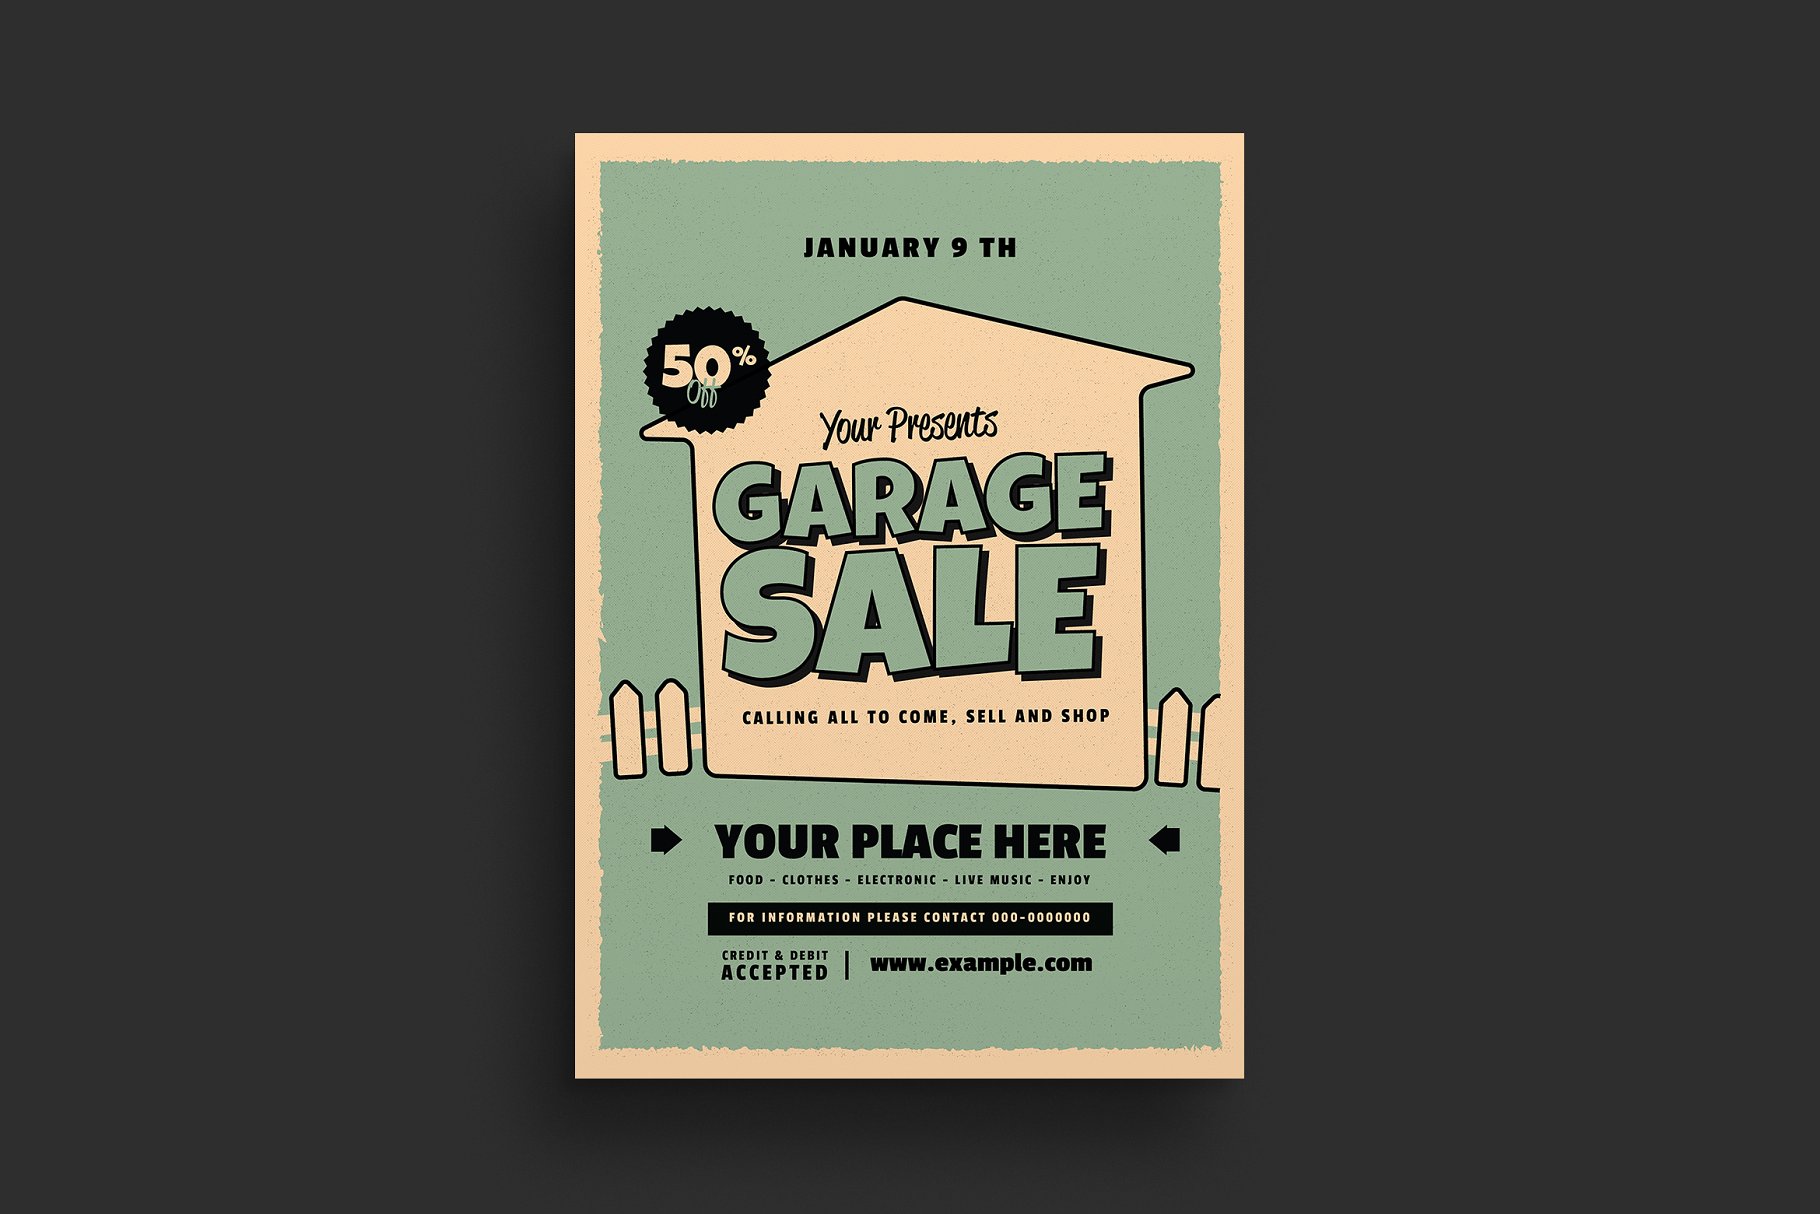 复古汽车销售活动促销广告模板 Retro Garage Sale Event Flyer插图(2)